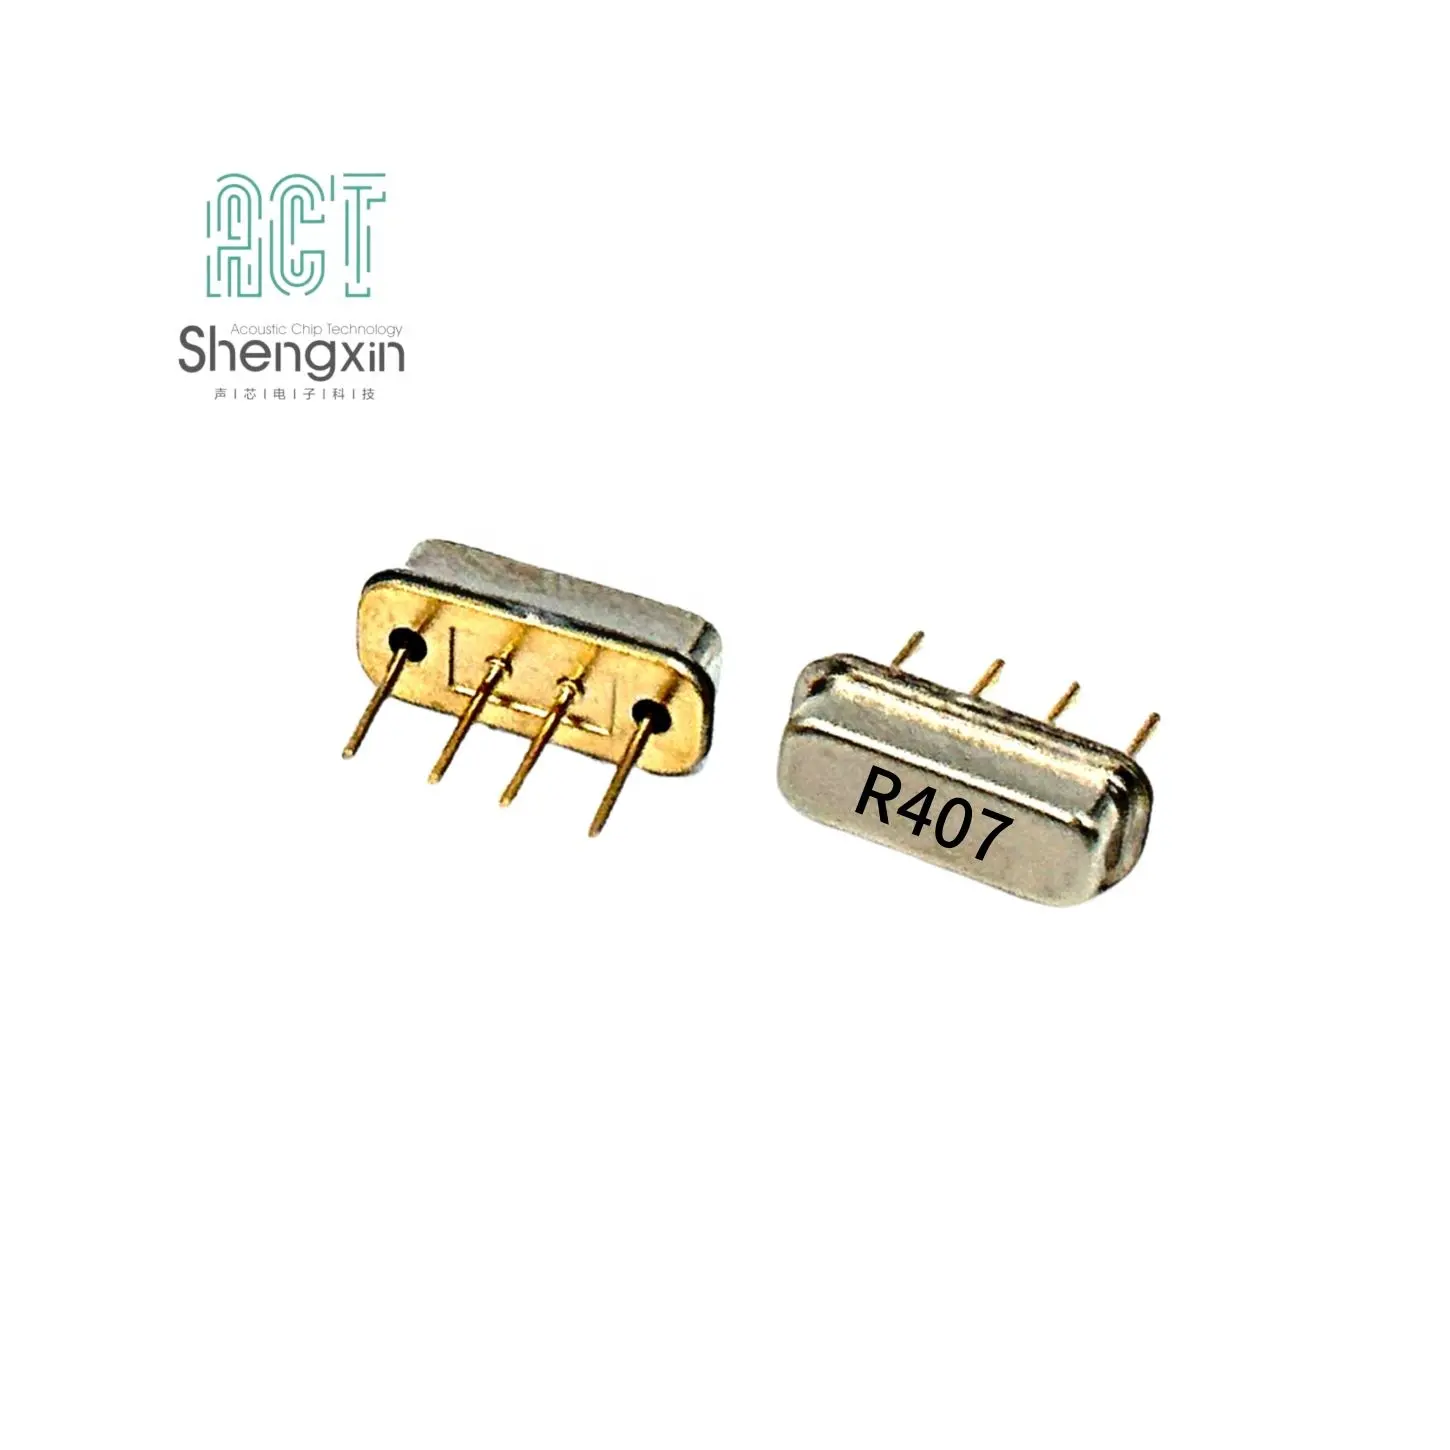 Resonador de sierra de chip acústico de 4 pines R407.300MHz de 2-100kHz para sistemas de seguridad de antena parabólica de control remoto